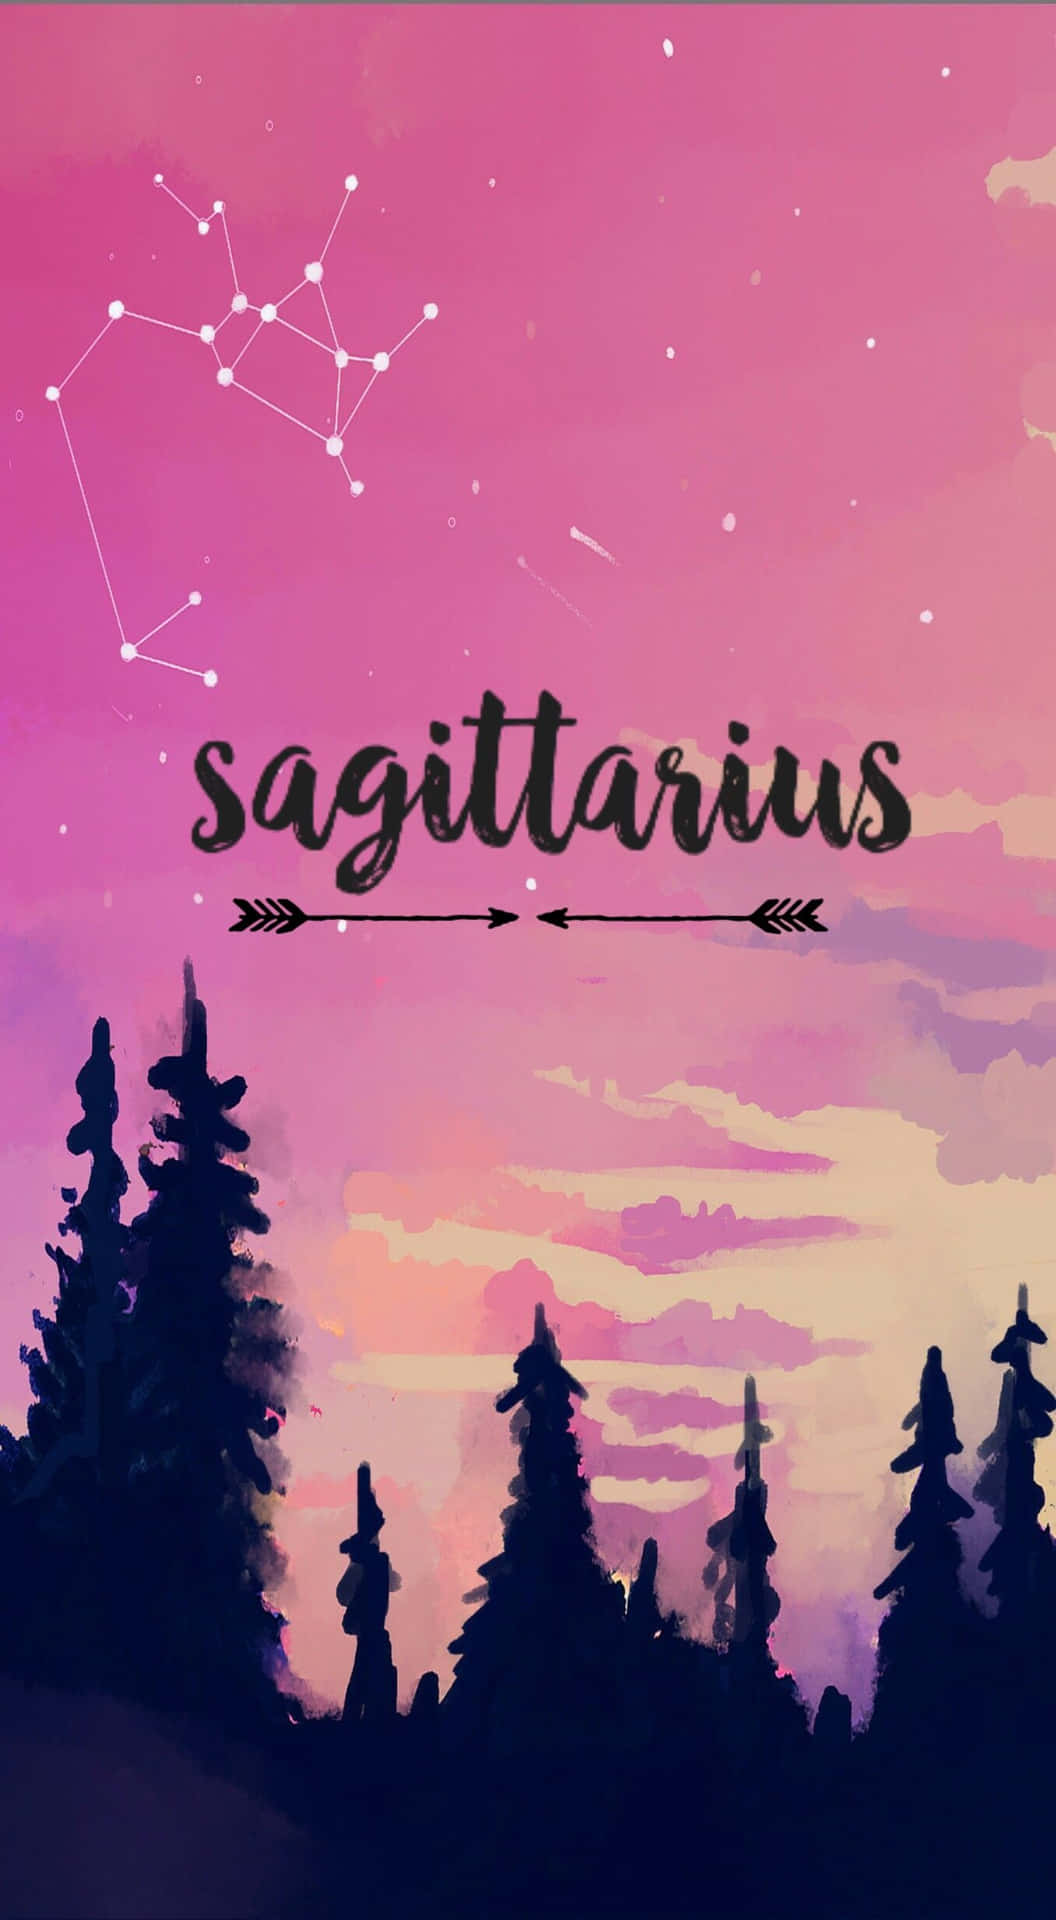 Free Sagittarius Zodiac Wallpaper Downloads, [100+] Sagittarius Zodiac  Wallpapers for FREE 